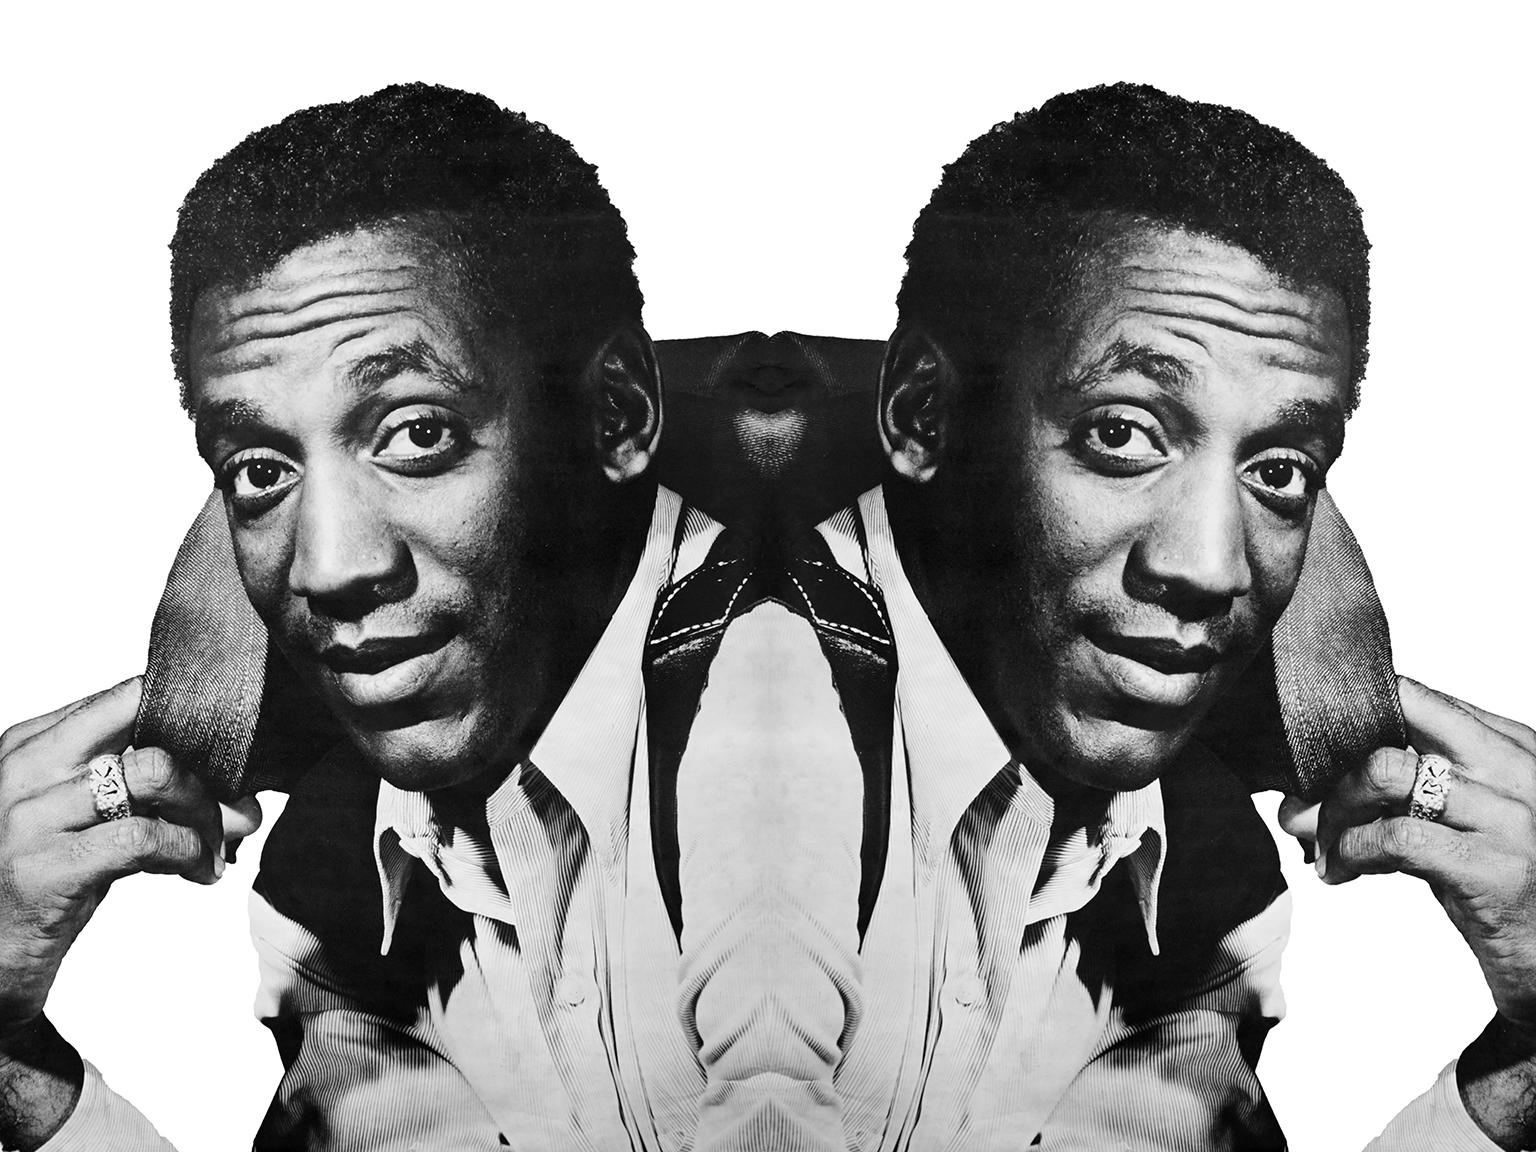 Black and White Photograph Bevan Ramsay - L'histoire de deux Cosby